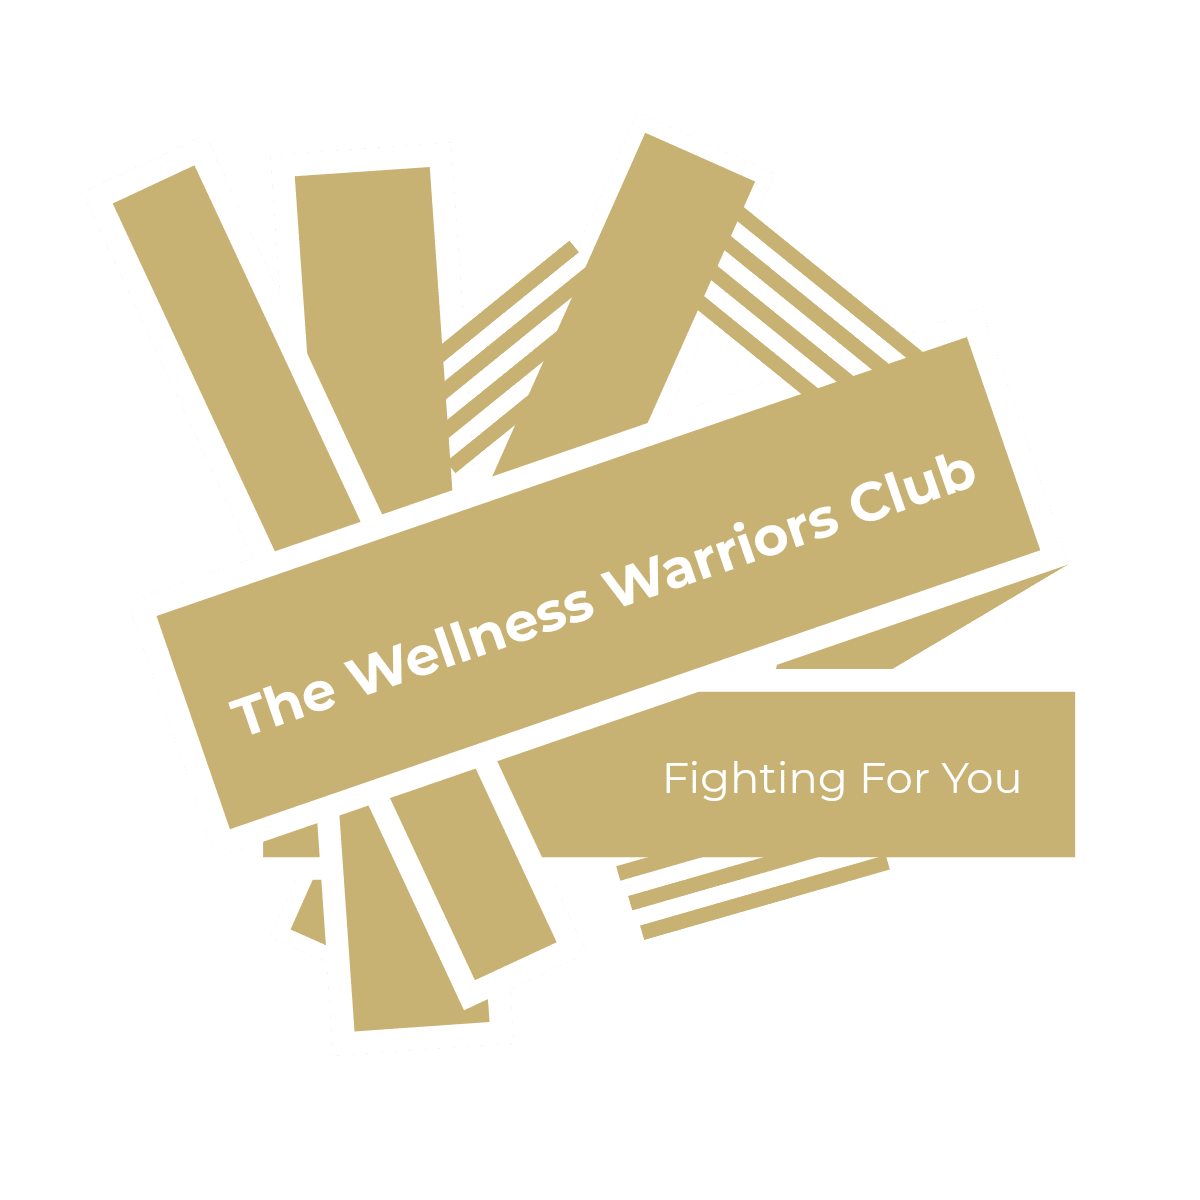 The Wellness Warriors Club